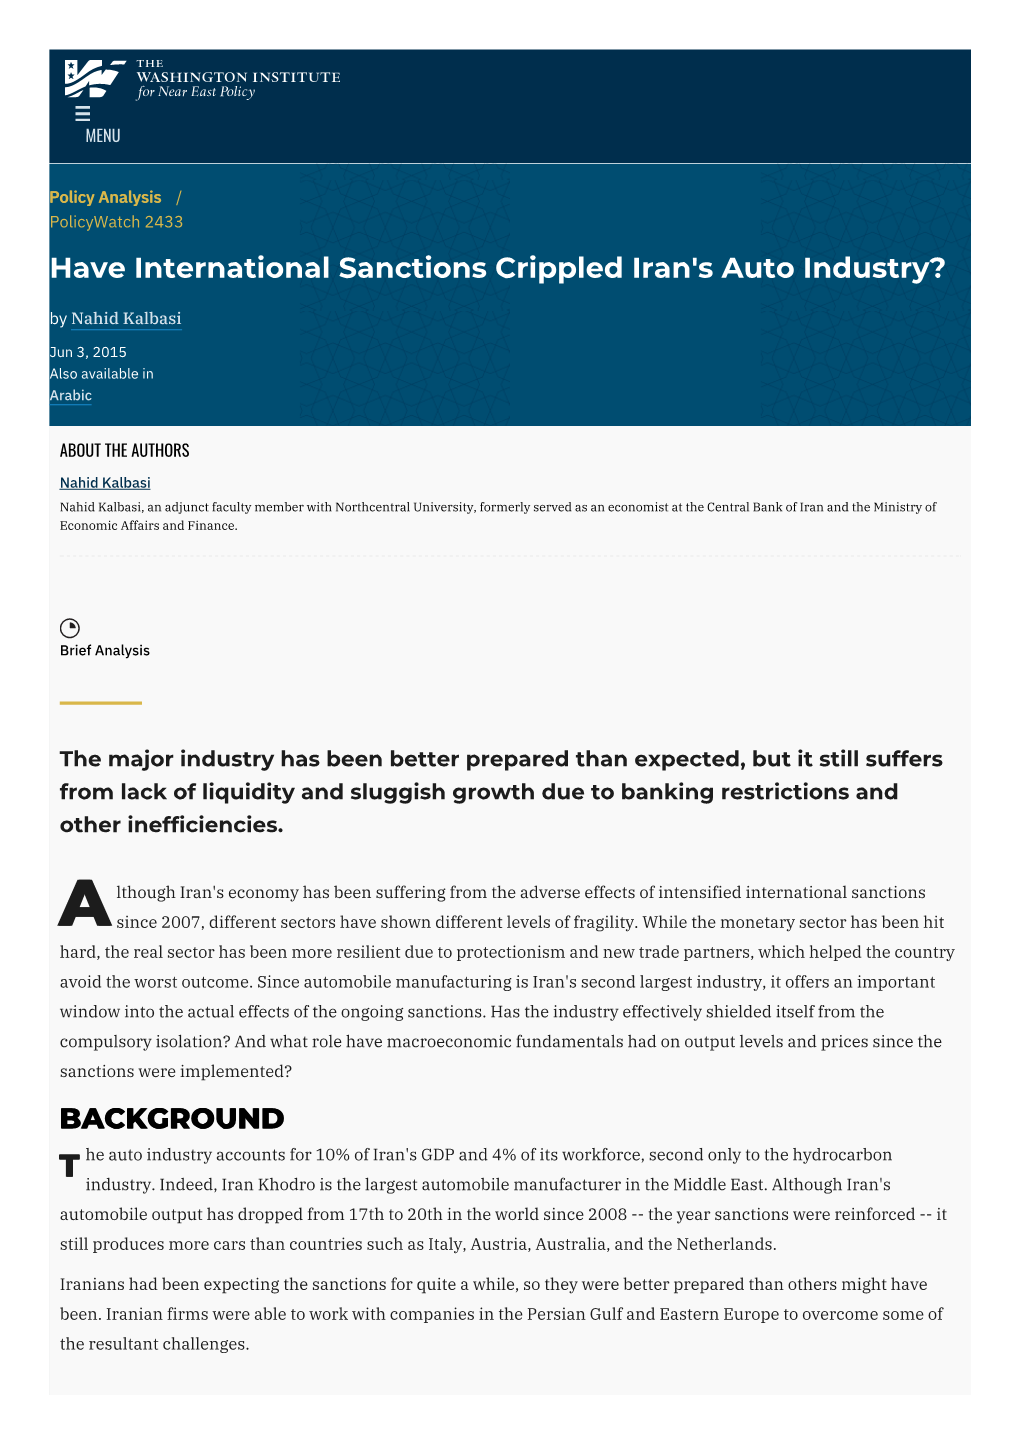 Have International Sanctions Crippled Iran's Auto Industry? | the Washington Institute